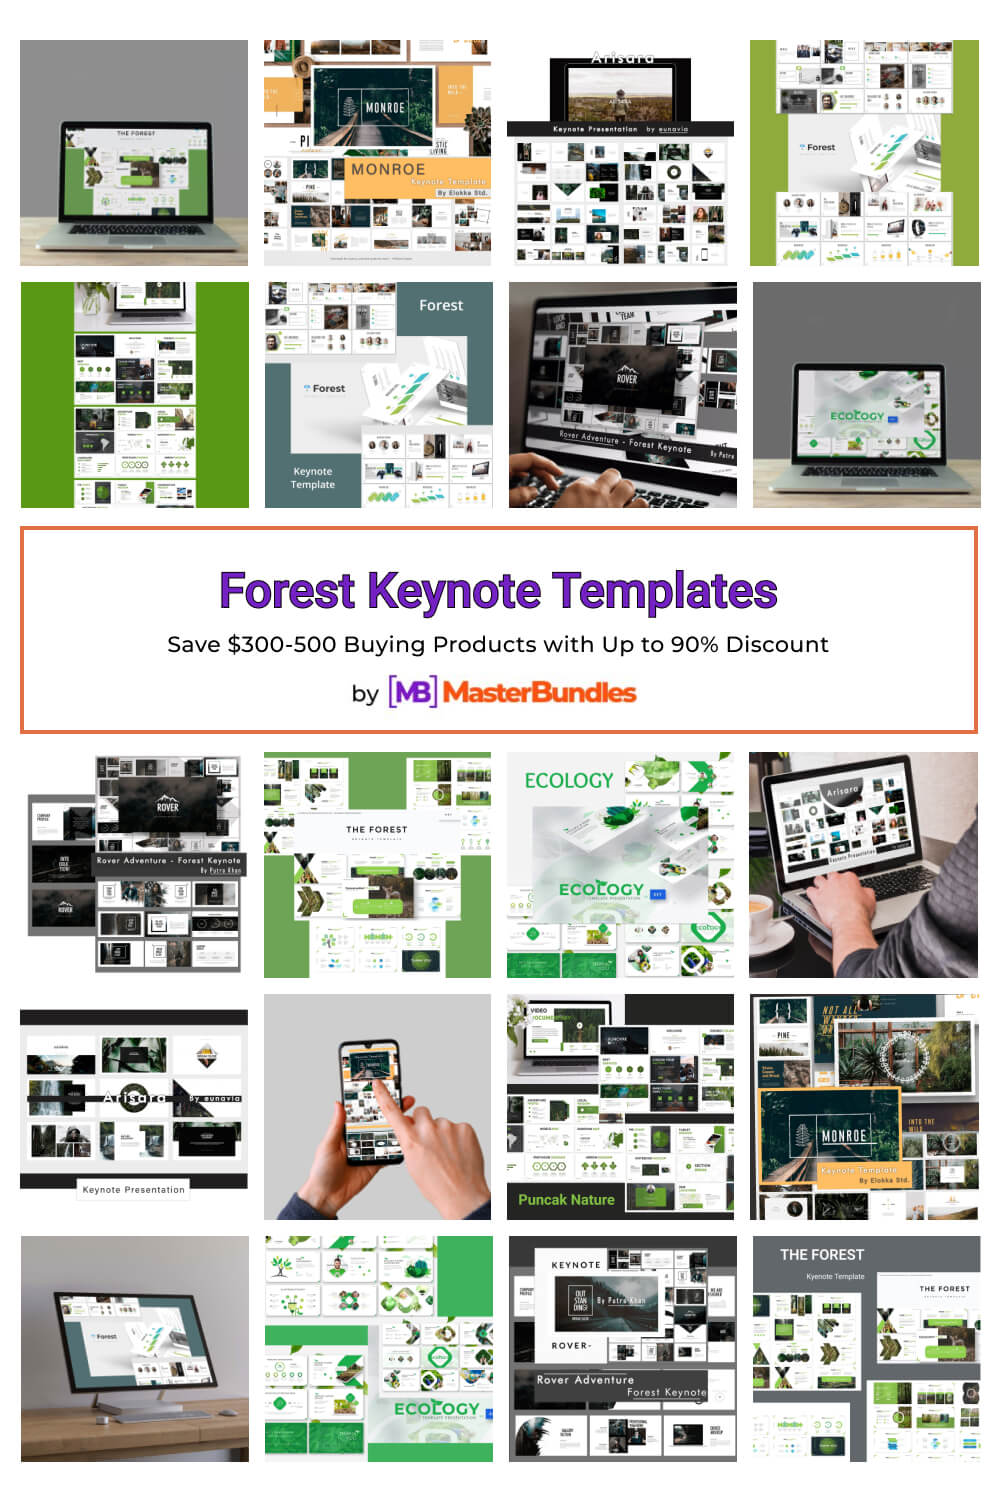 forest keynote templates pinterest image.